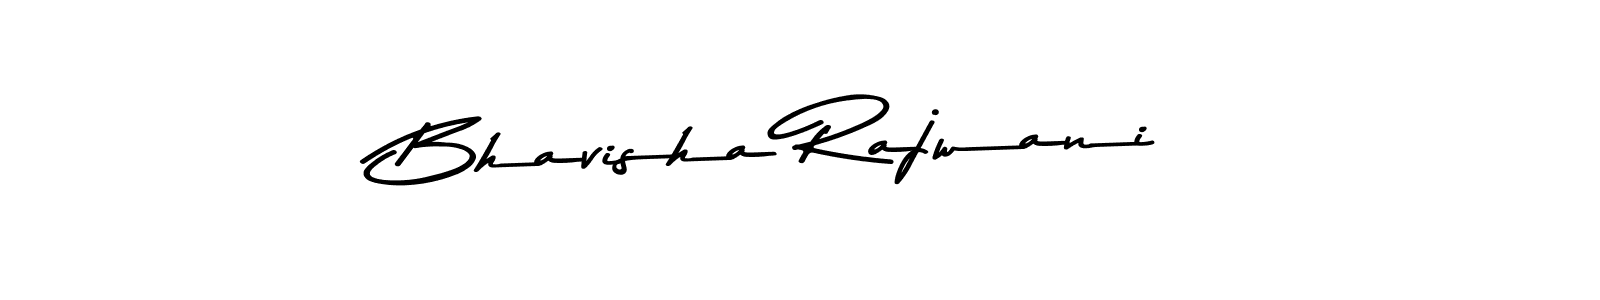 How to Draw Bhavisha Rajwani signature style? Asem Kandis PERSONAL USE is a latest design signature styles for name Bhavisha Rajwani. Bhavisha Rajwani signature style 9 images and pictures png